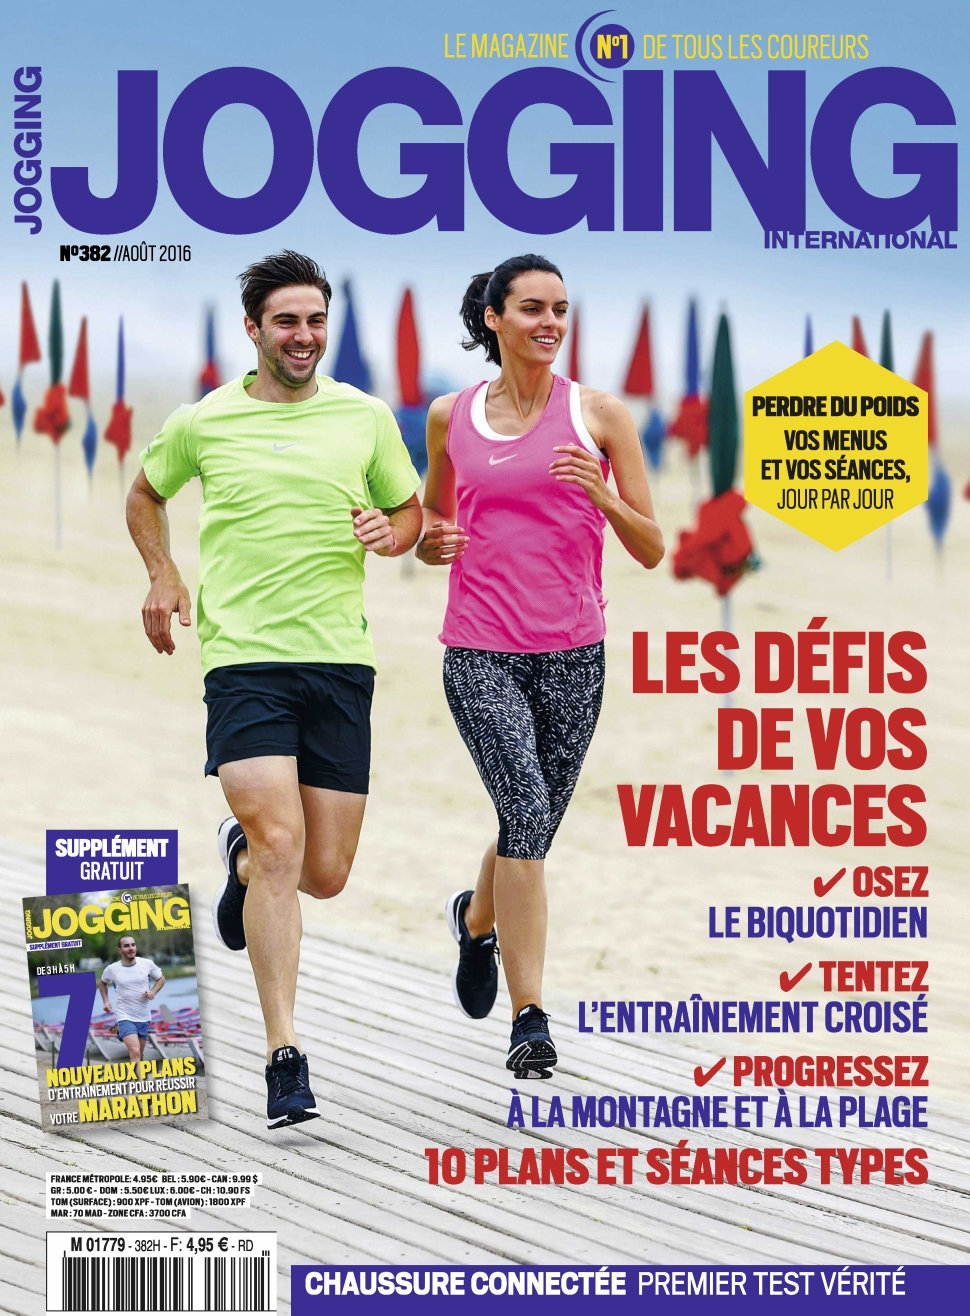 Jogging International N°382 - Aout 2016